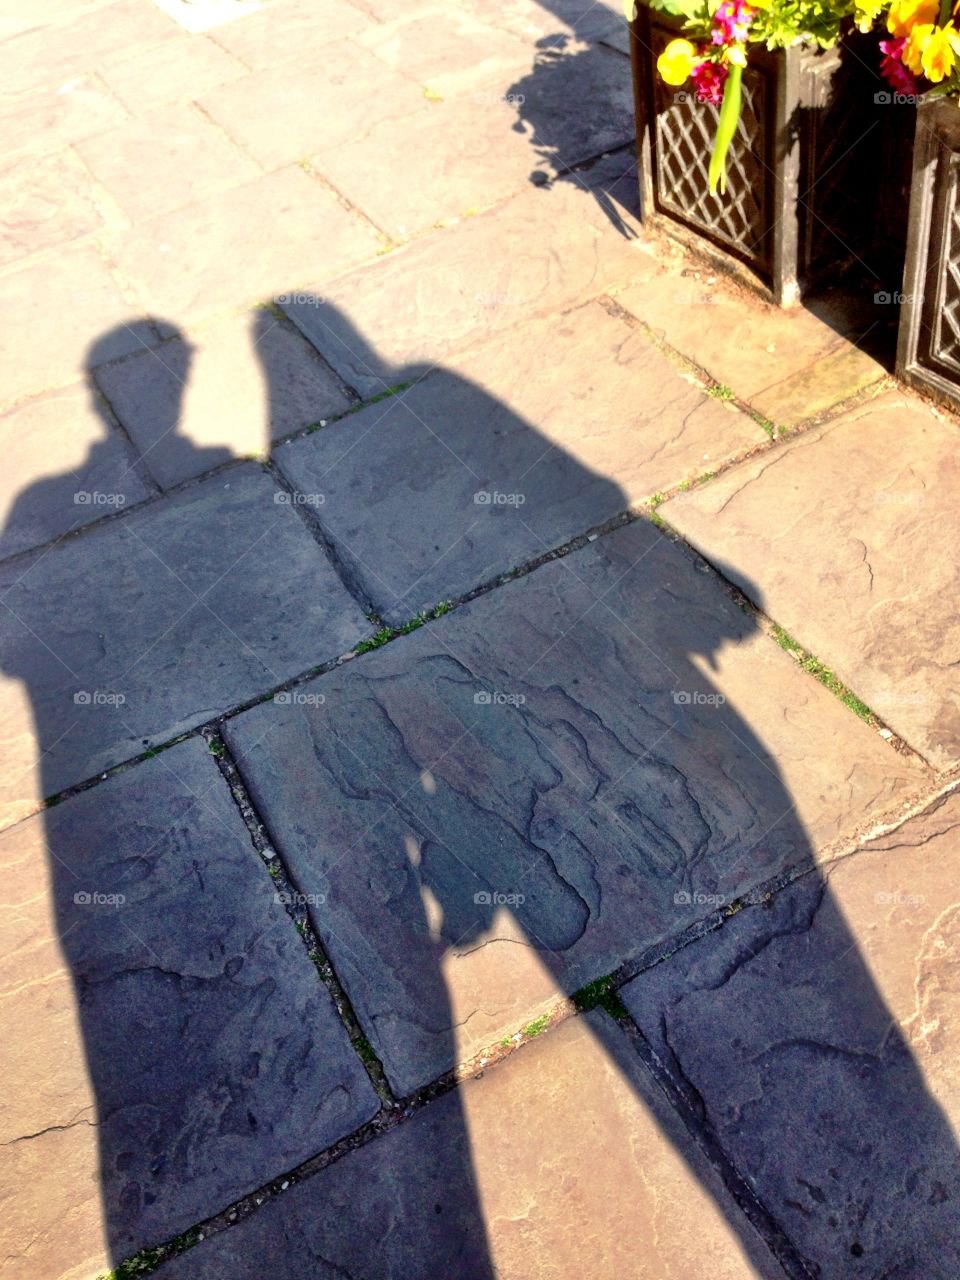 A photo of my lady and I on our way to hike up the Glastonbury Tor, in Glastonbury England. 